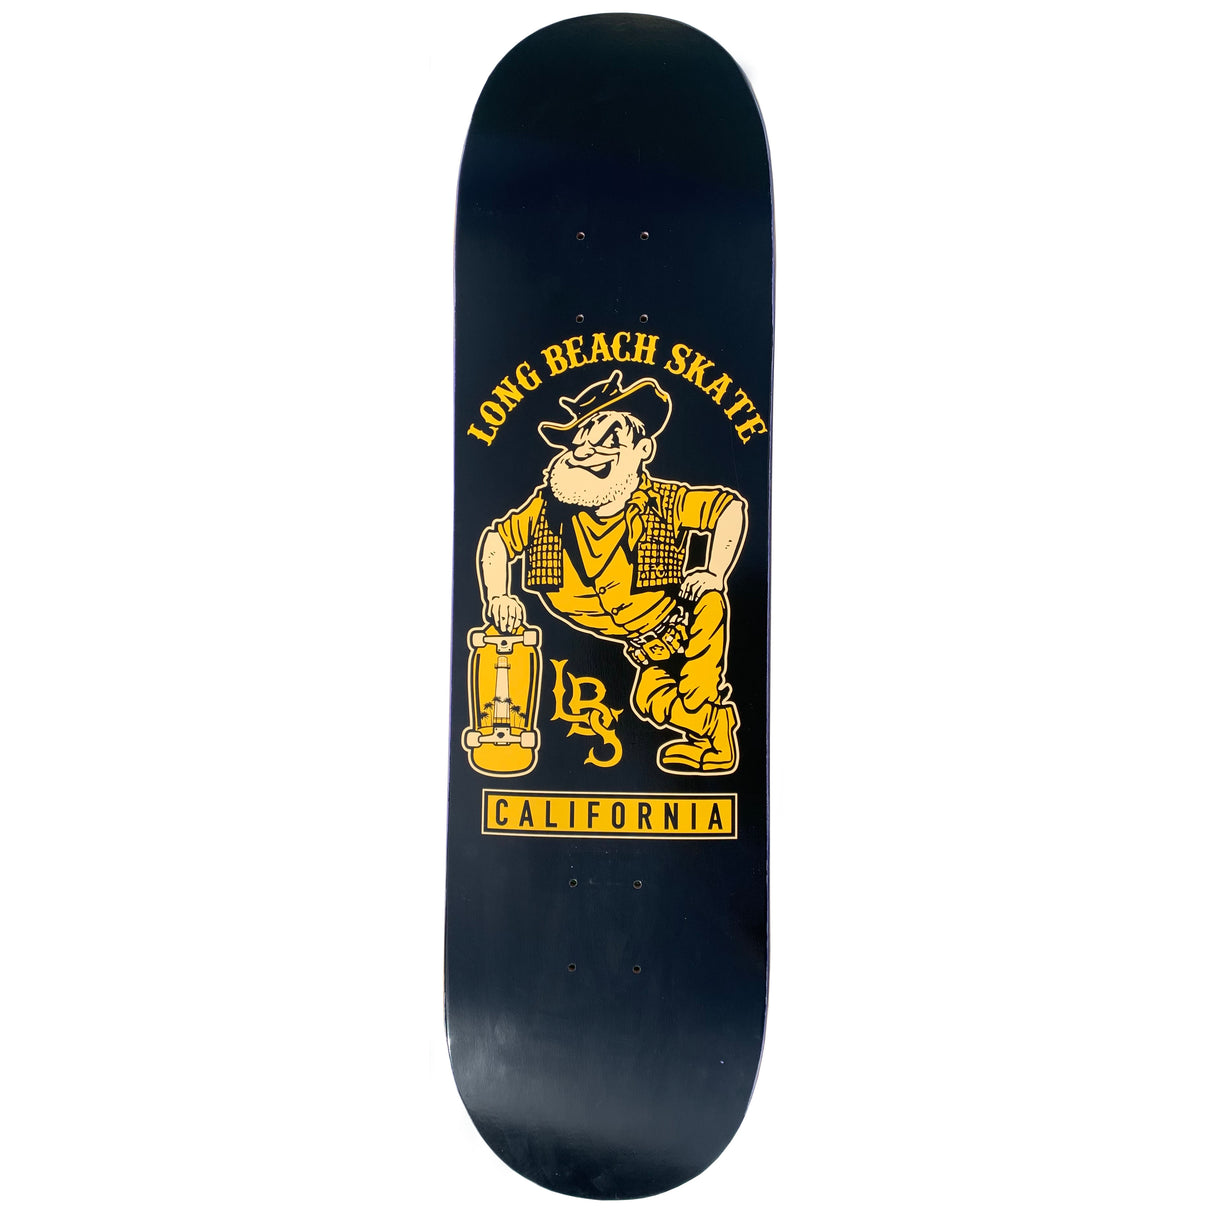 Long Beach Skate Co. Prospector 8.0" Skateboard Deck